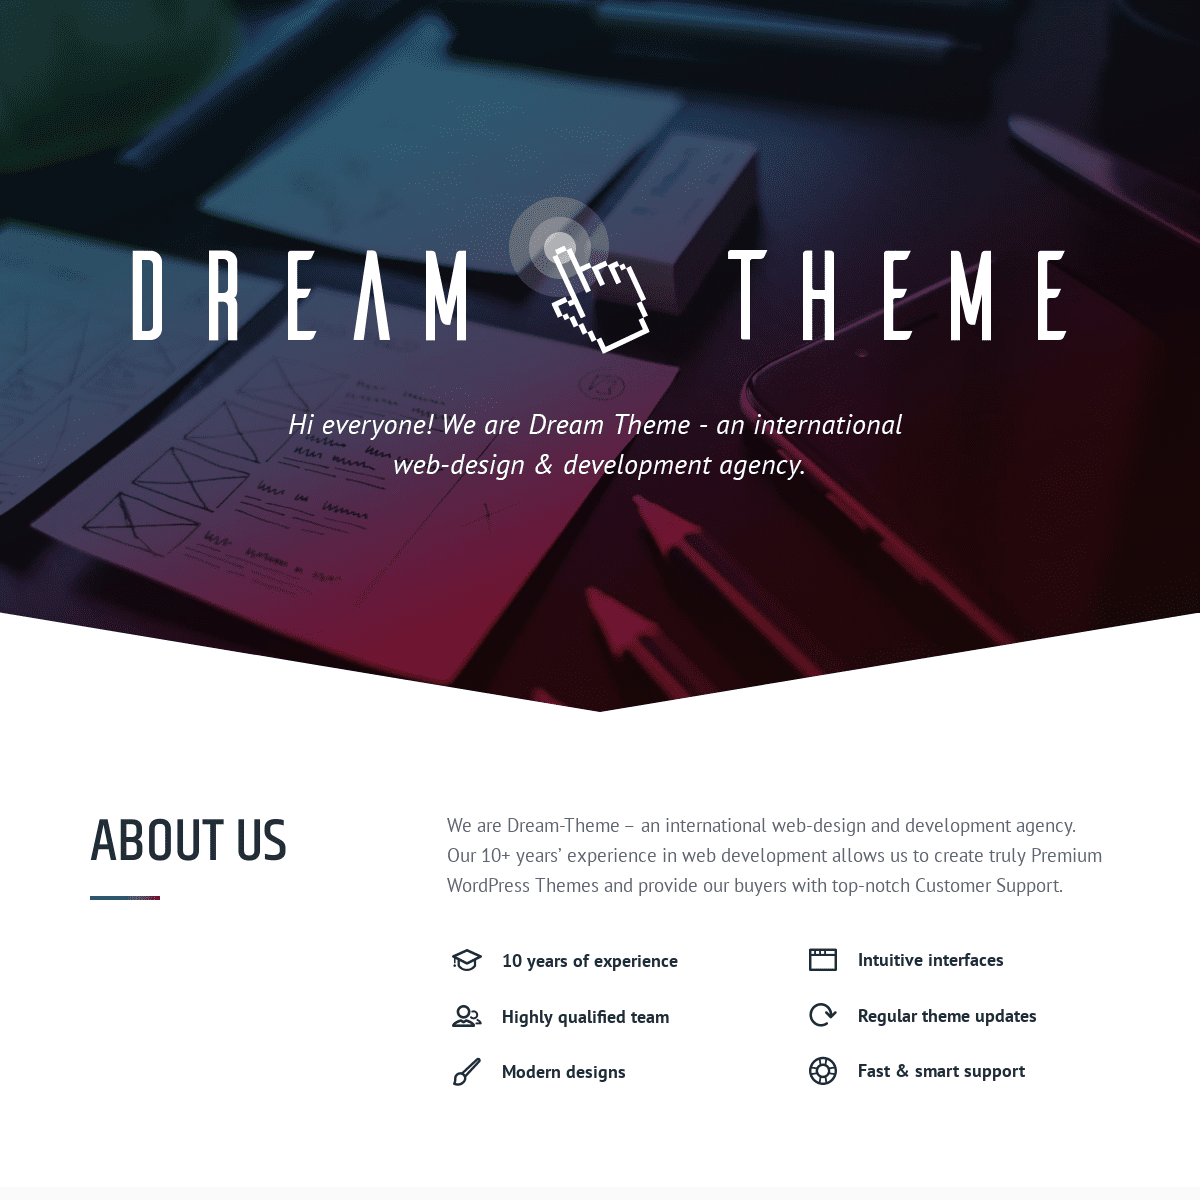 A complete backup of dream-theme.com